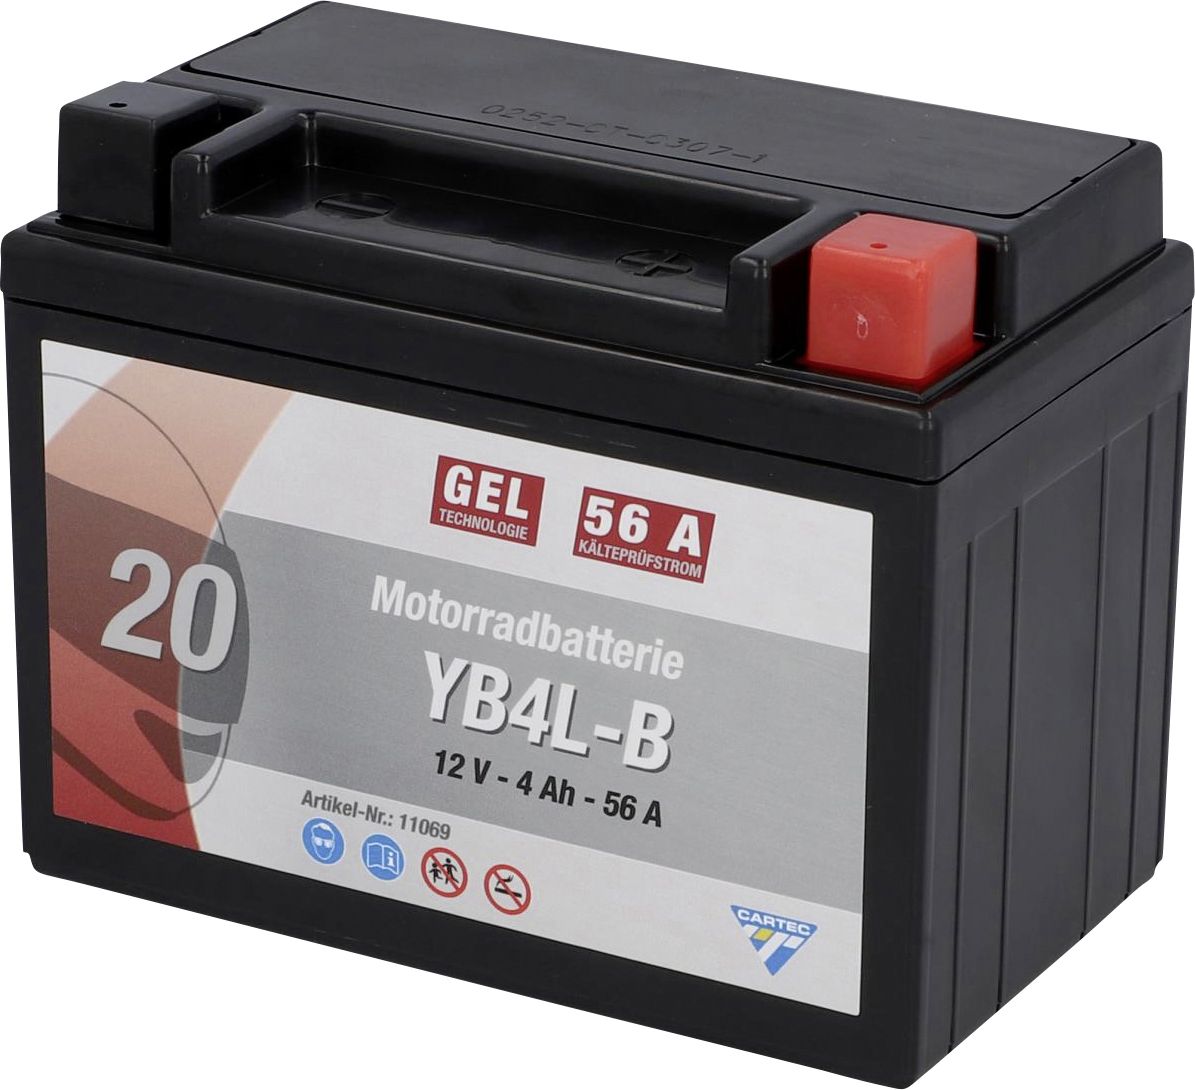 Cartec Gel Motorradbatterie YB4L-B 4Ah 56A GLO680456079